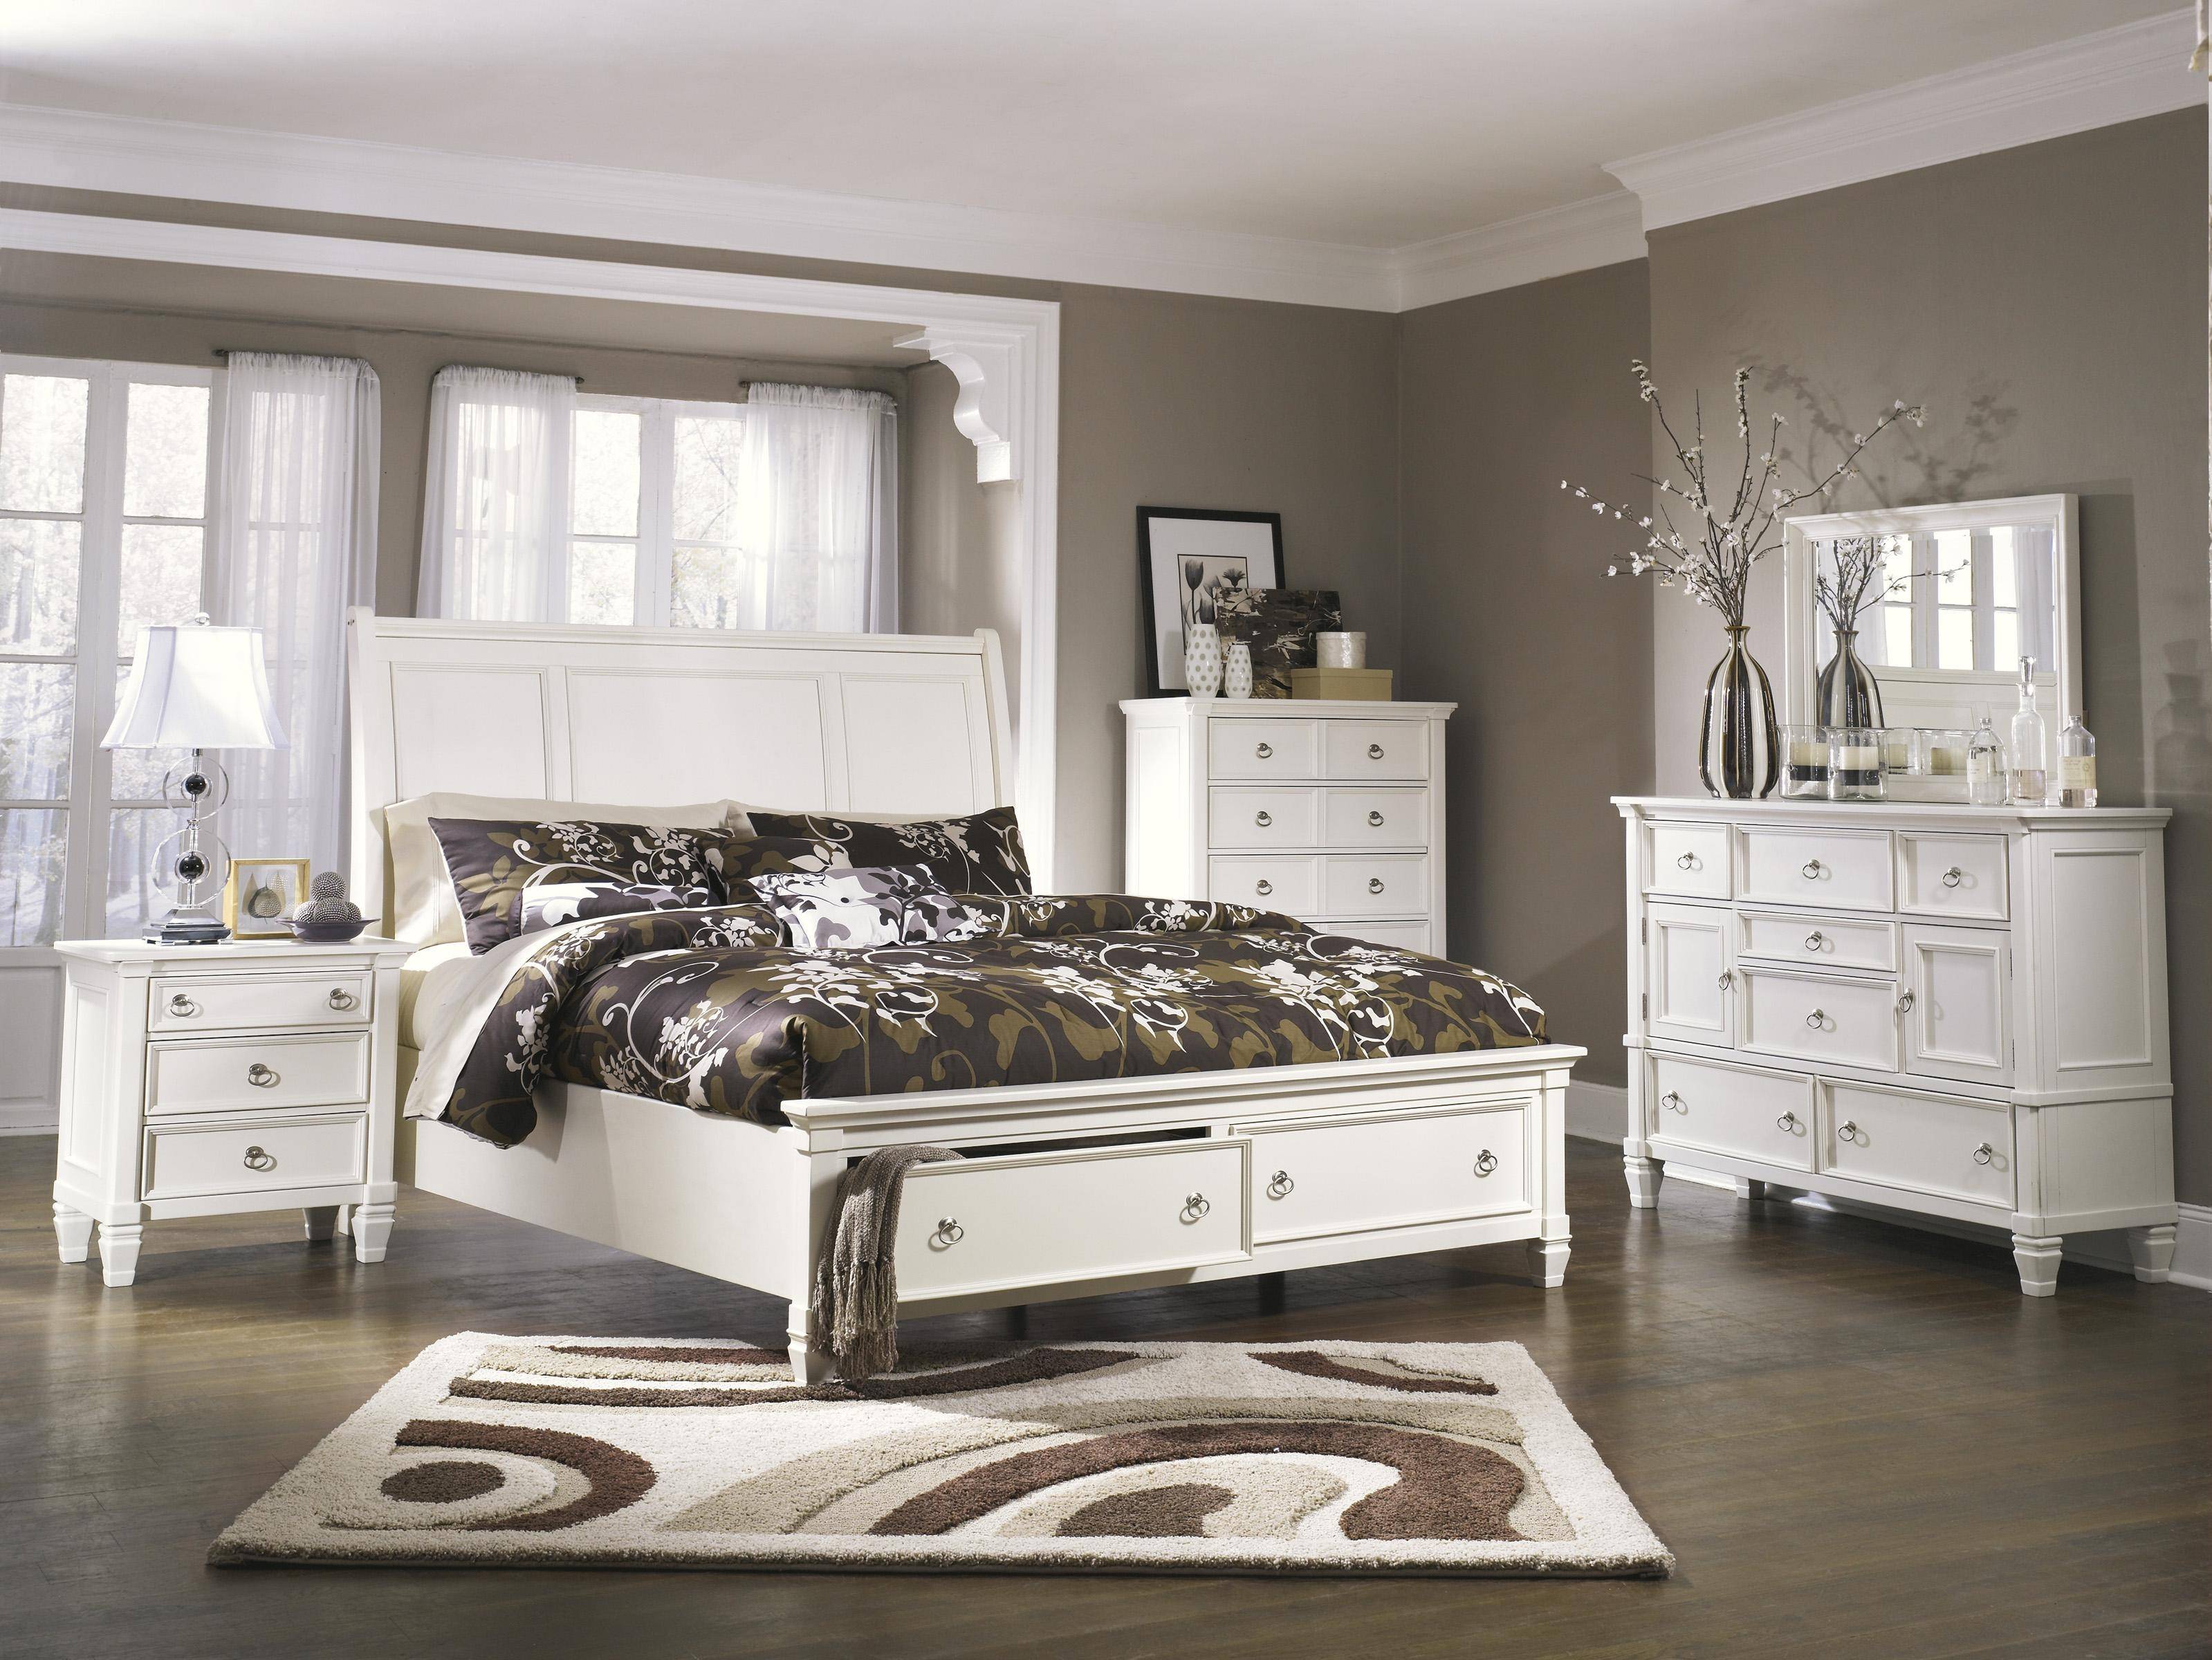 white bedroom furniture canada